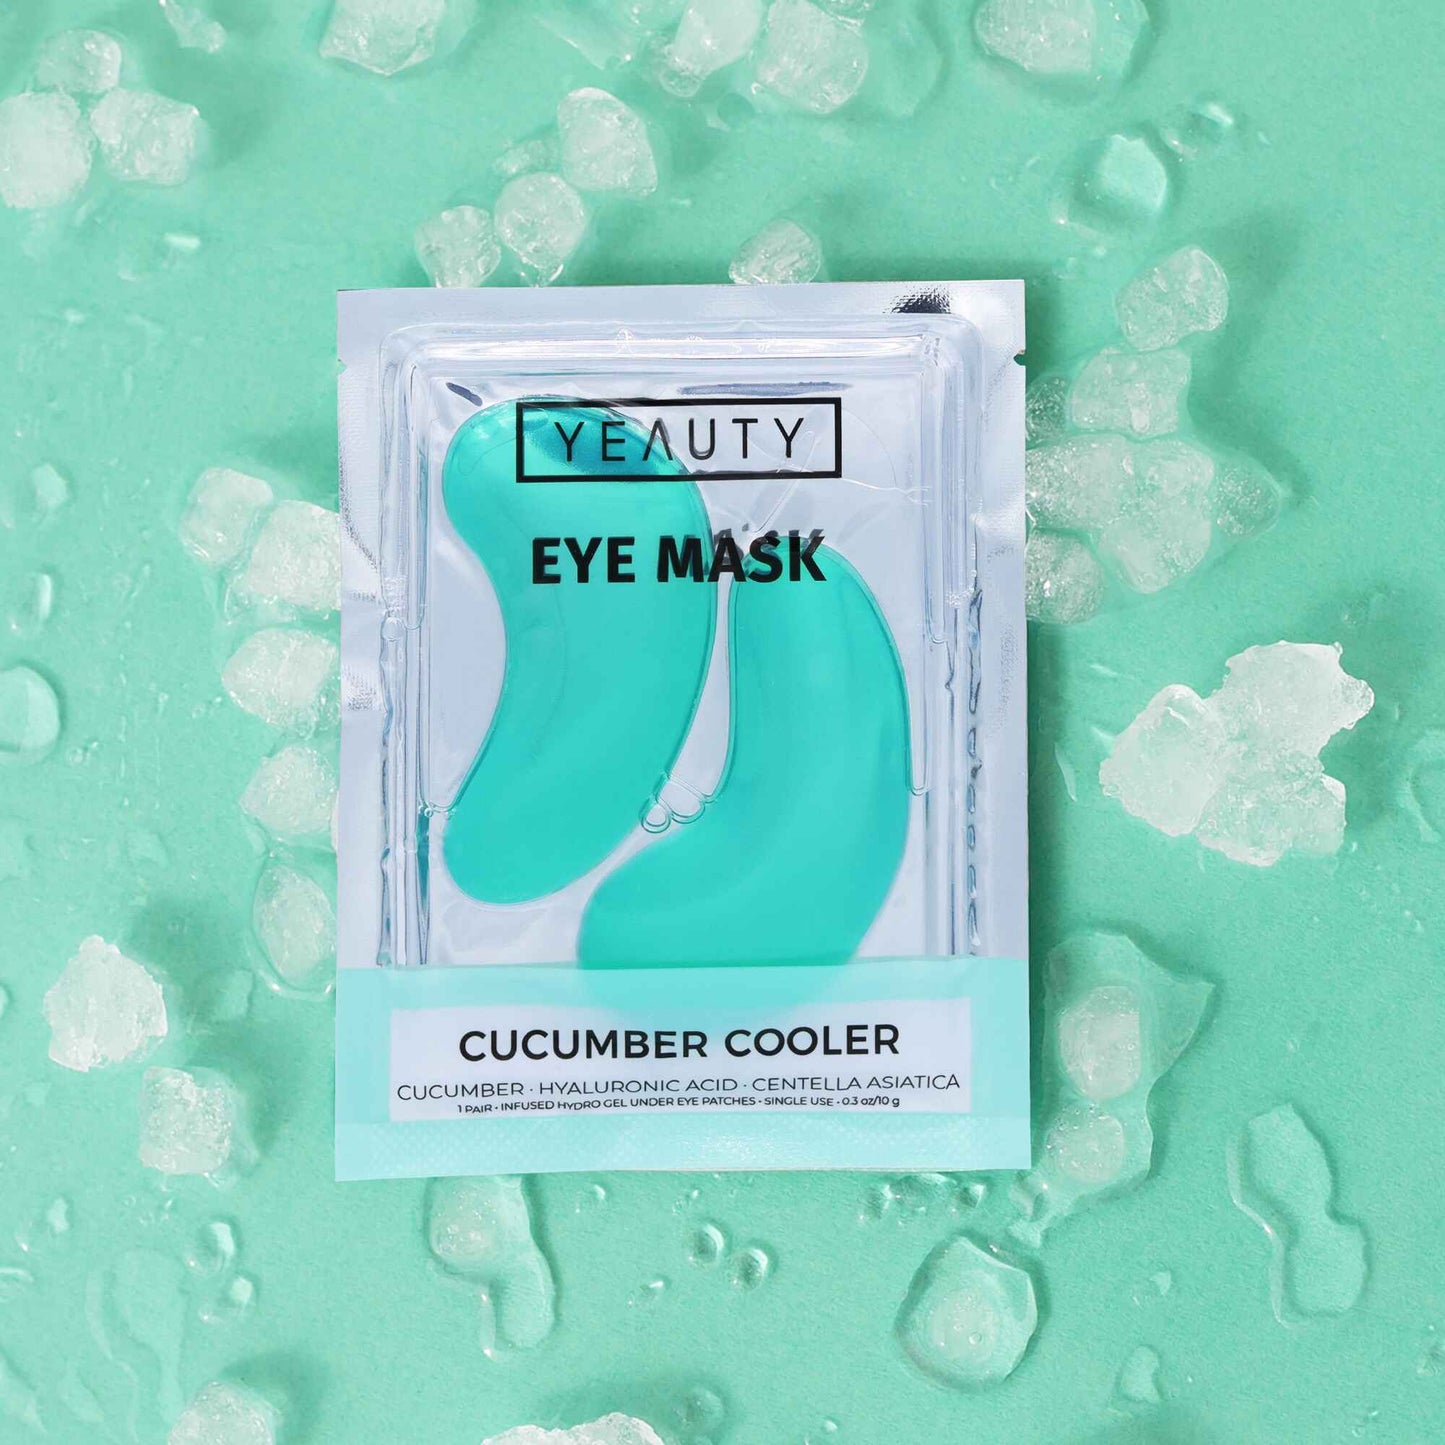 Yeauty Cucumber Cooler Eye Mask